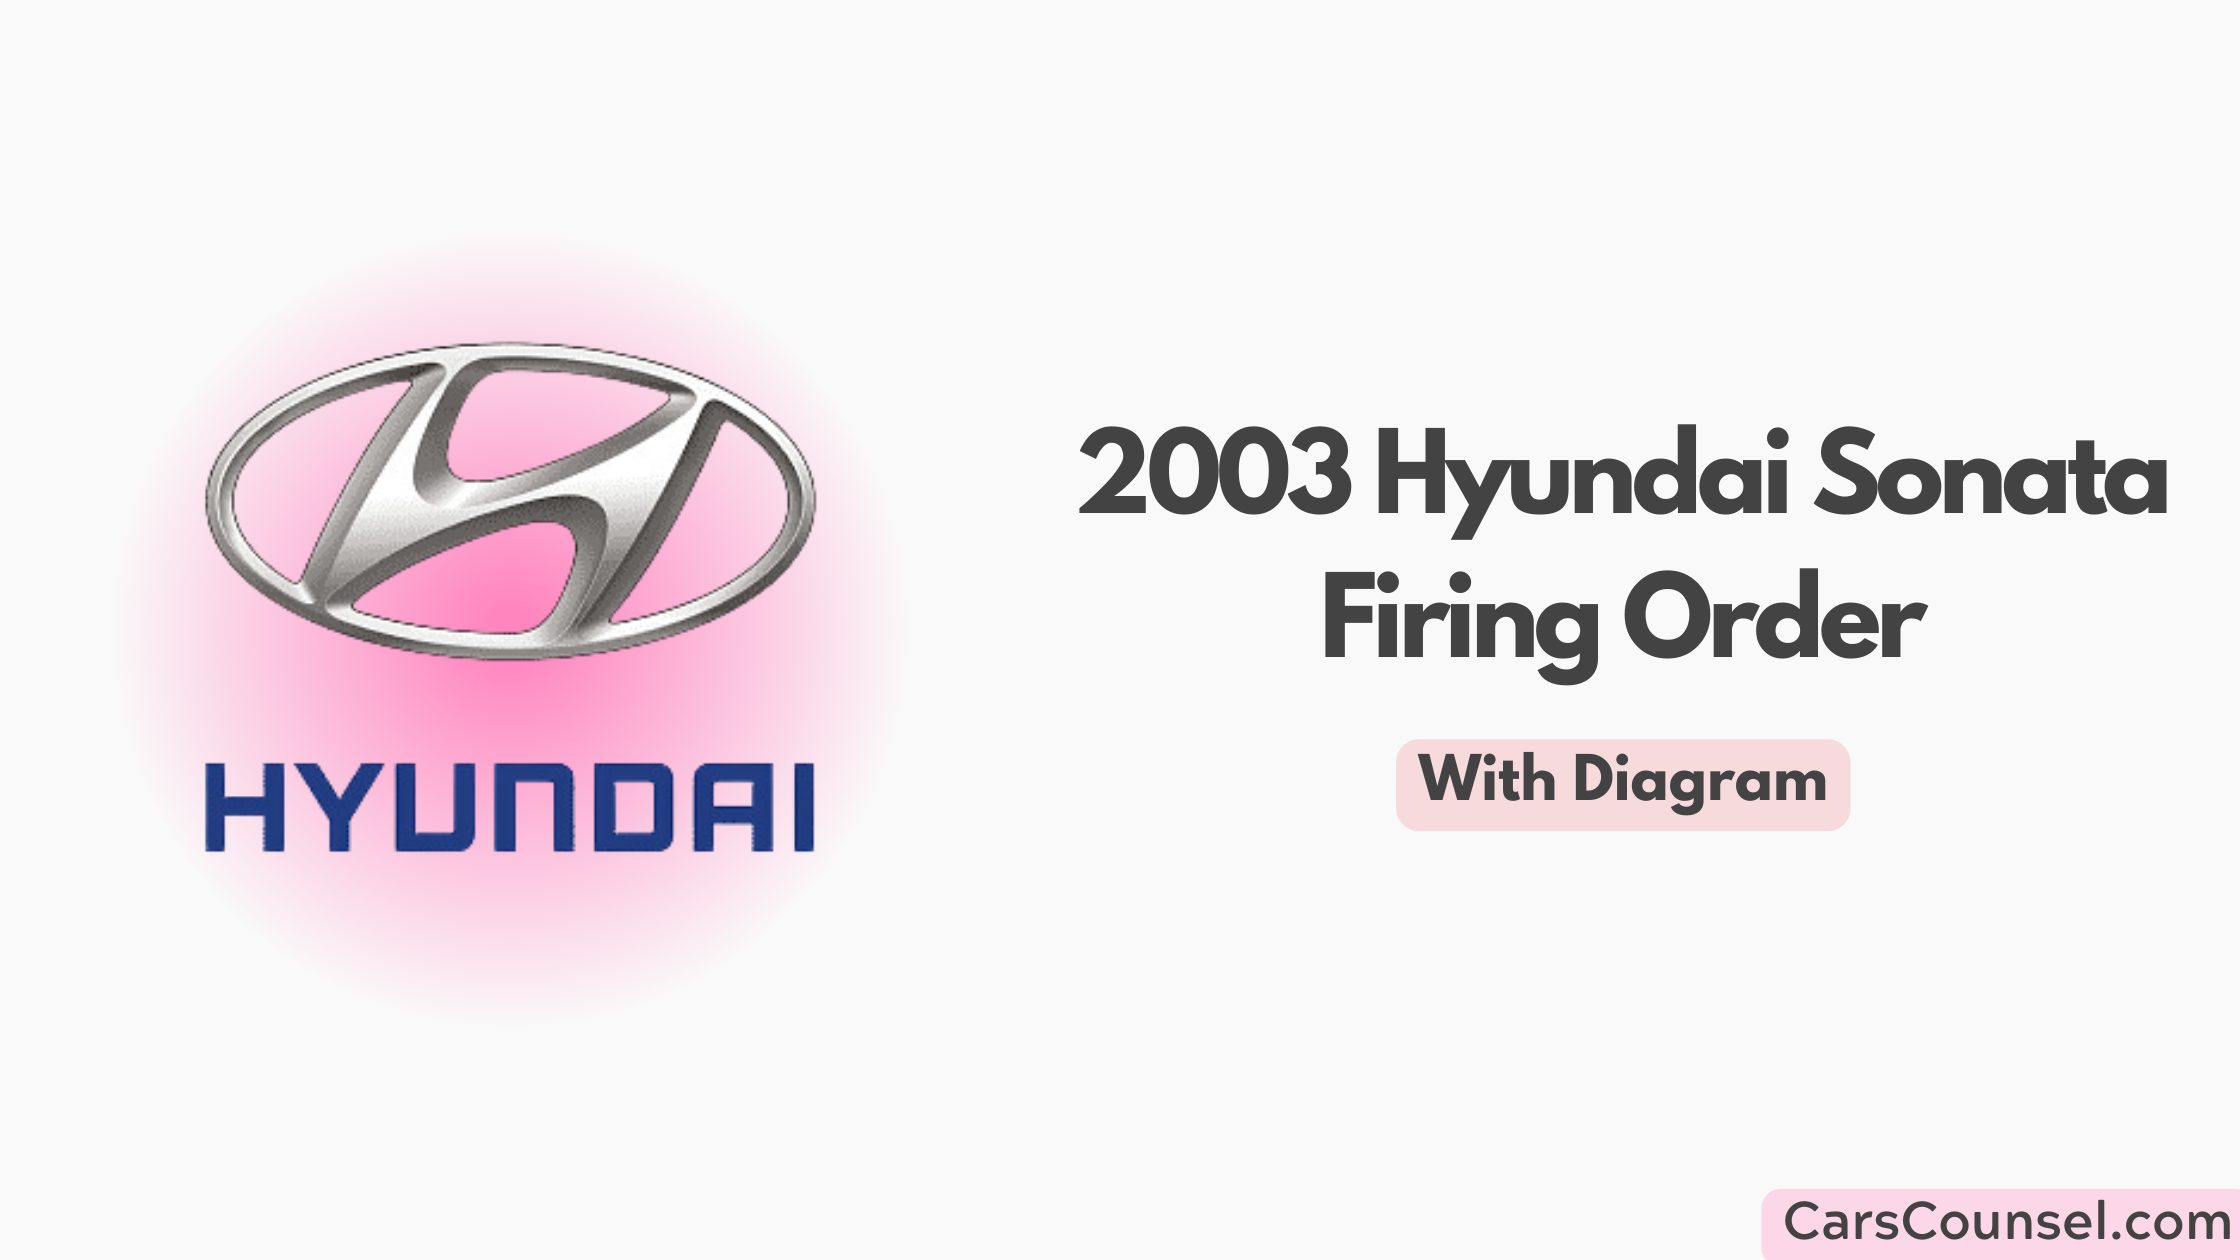 2003 Hyundai Sonata Firing Order With Diagram